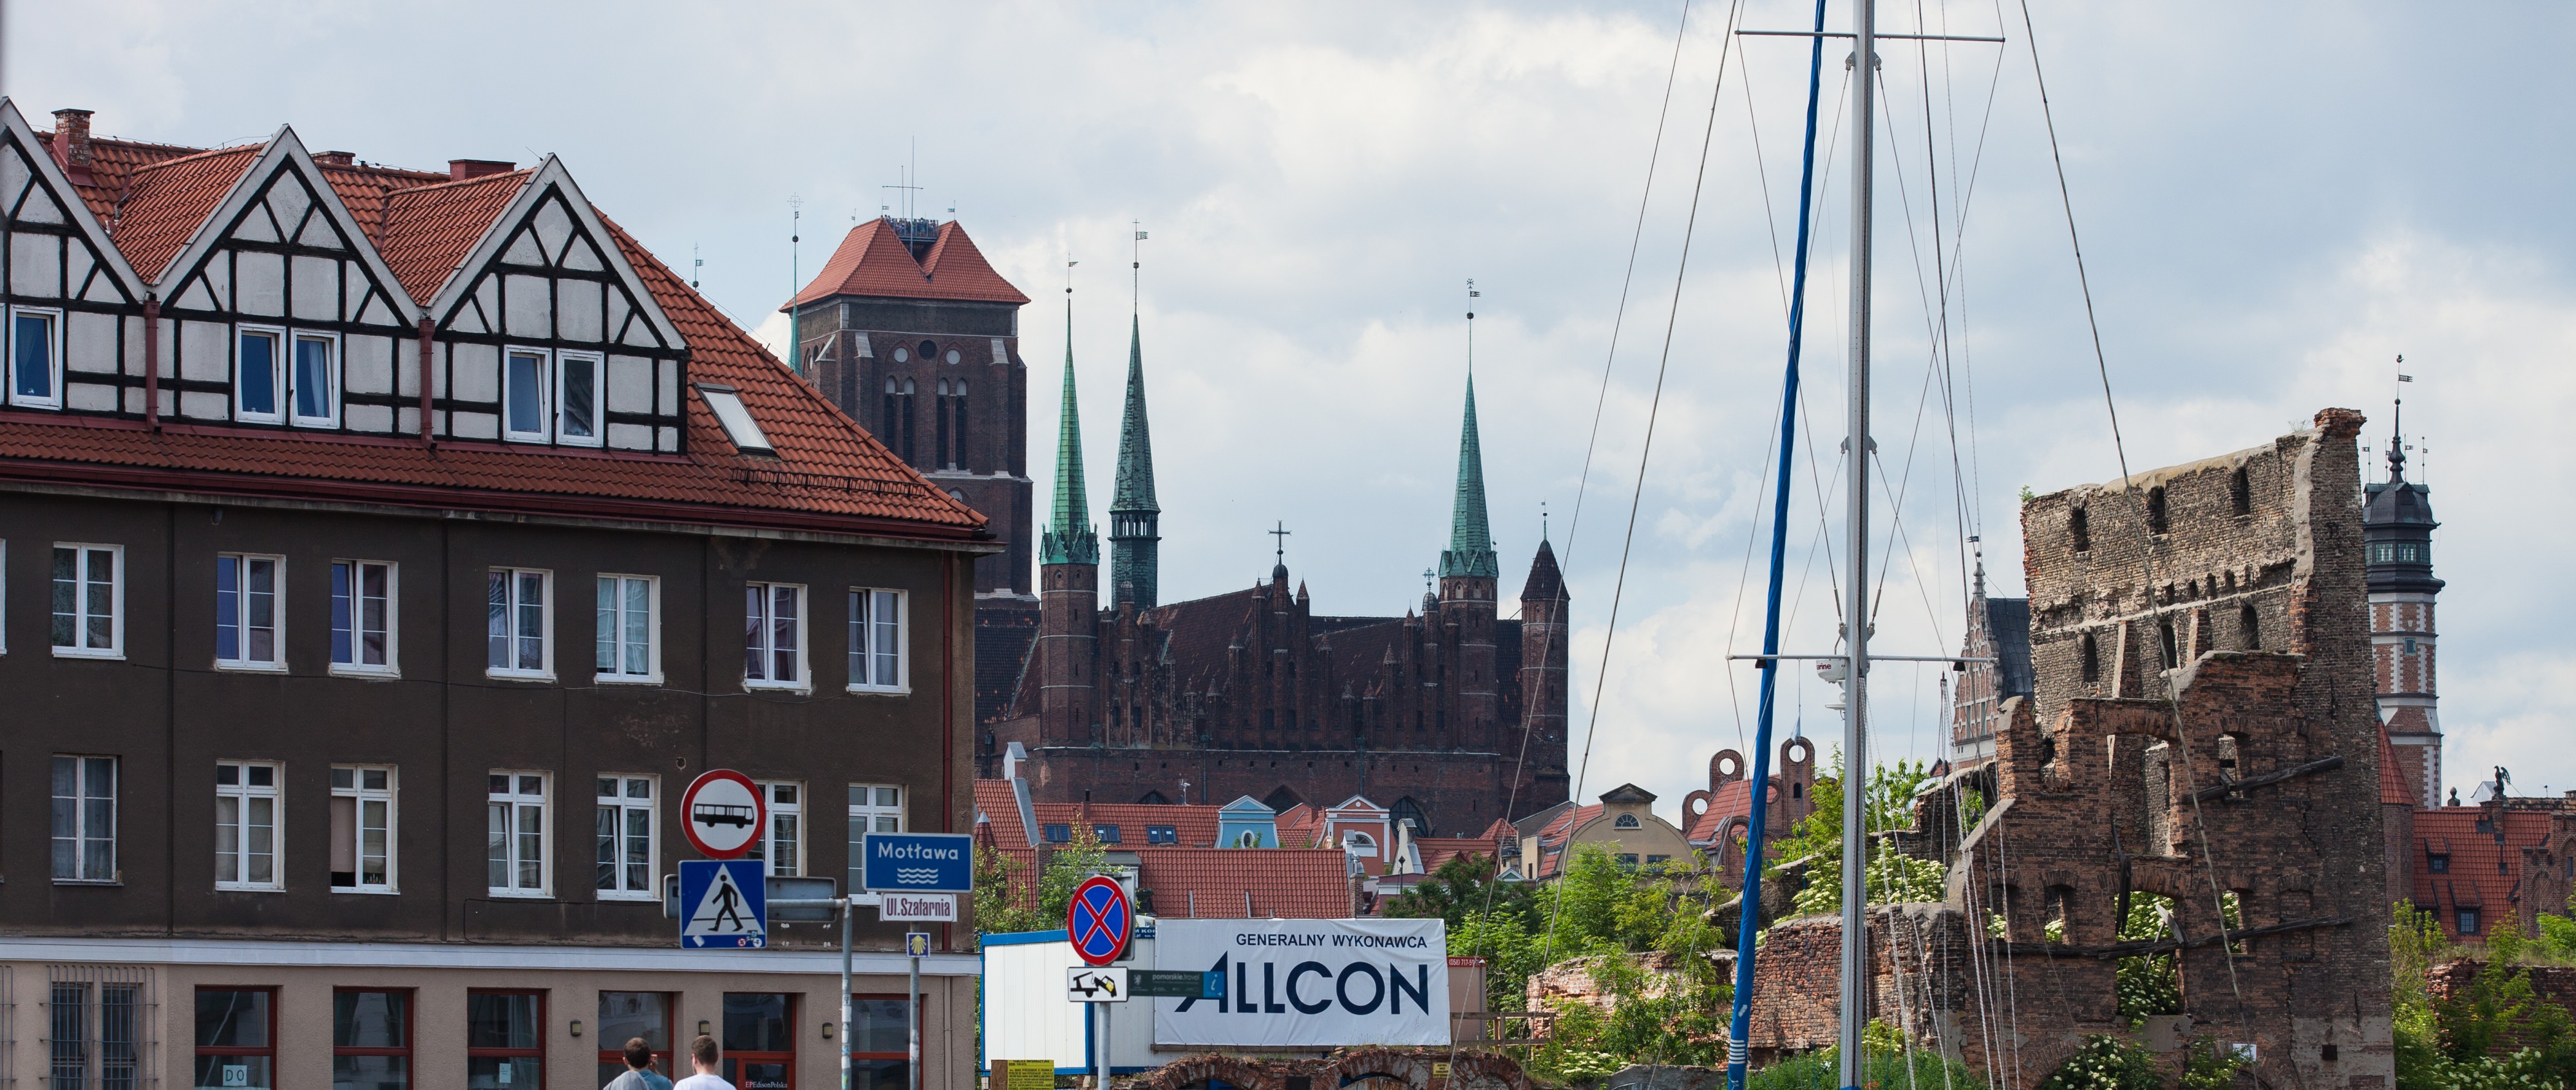 Gdansk city, Poland, June 2014, picture 2